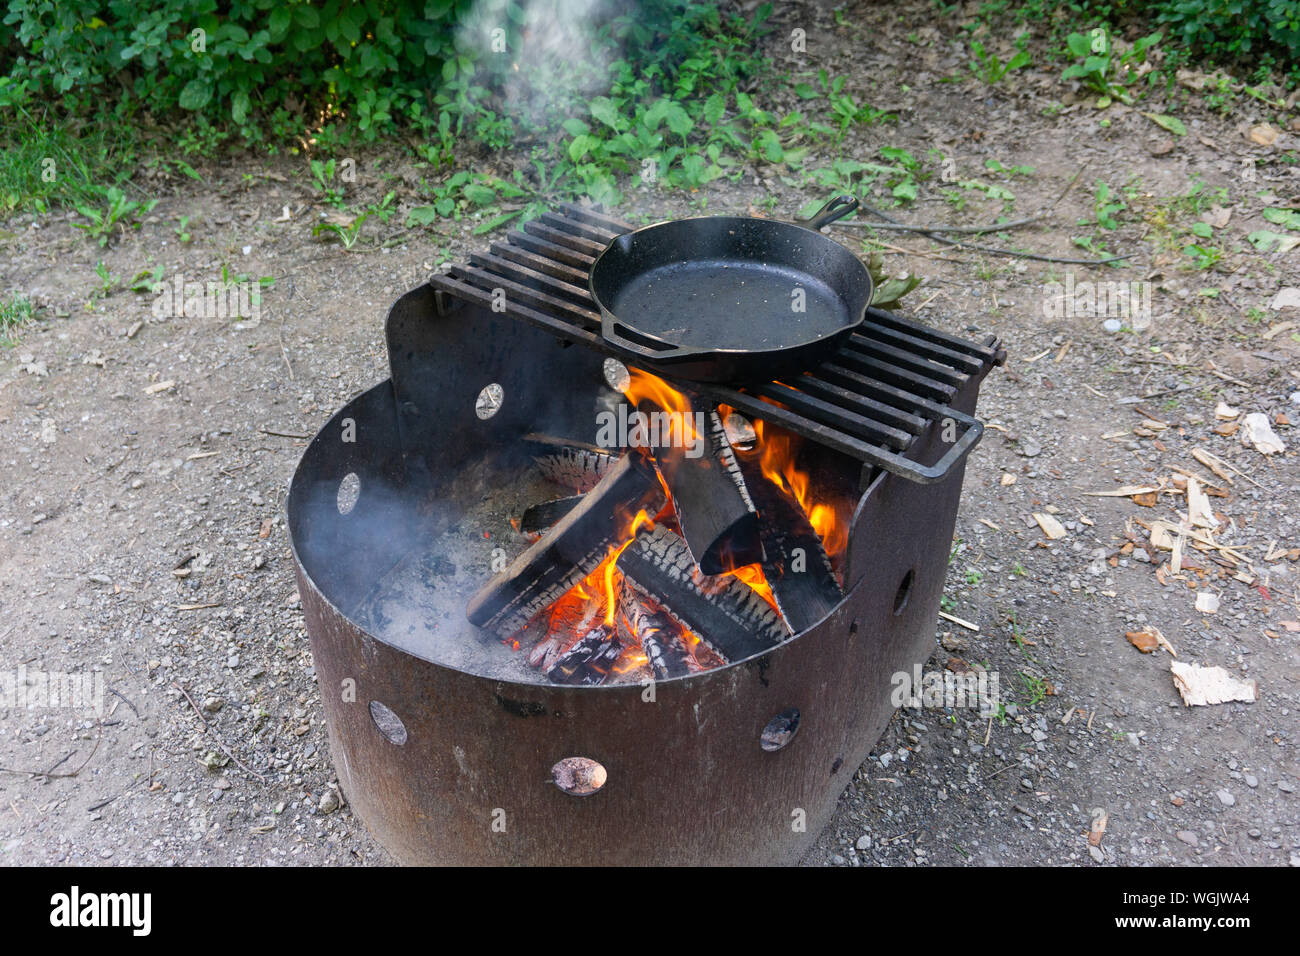 https://c8.alamy.com/comp/WGJWA4/cast-iron-skillet-cooking-over-bonfire-WGJWA4.jpg